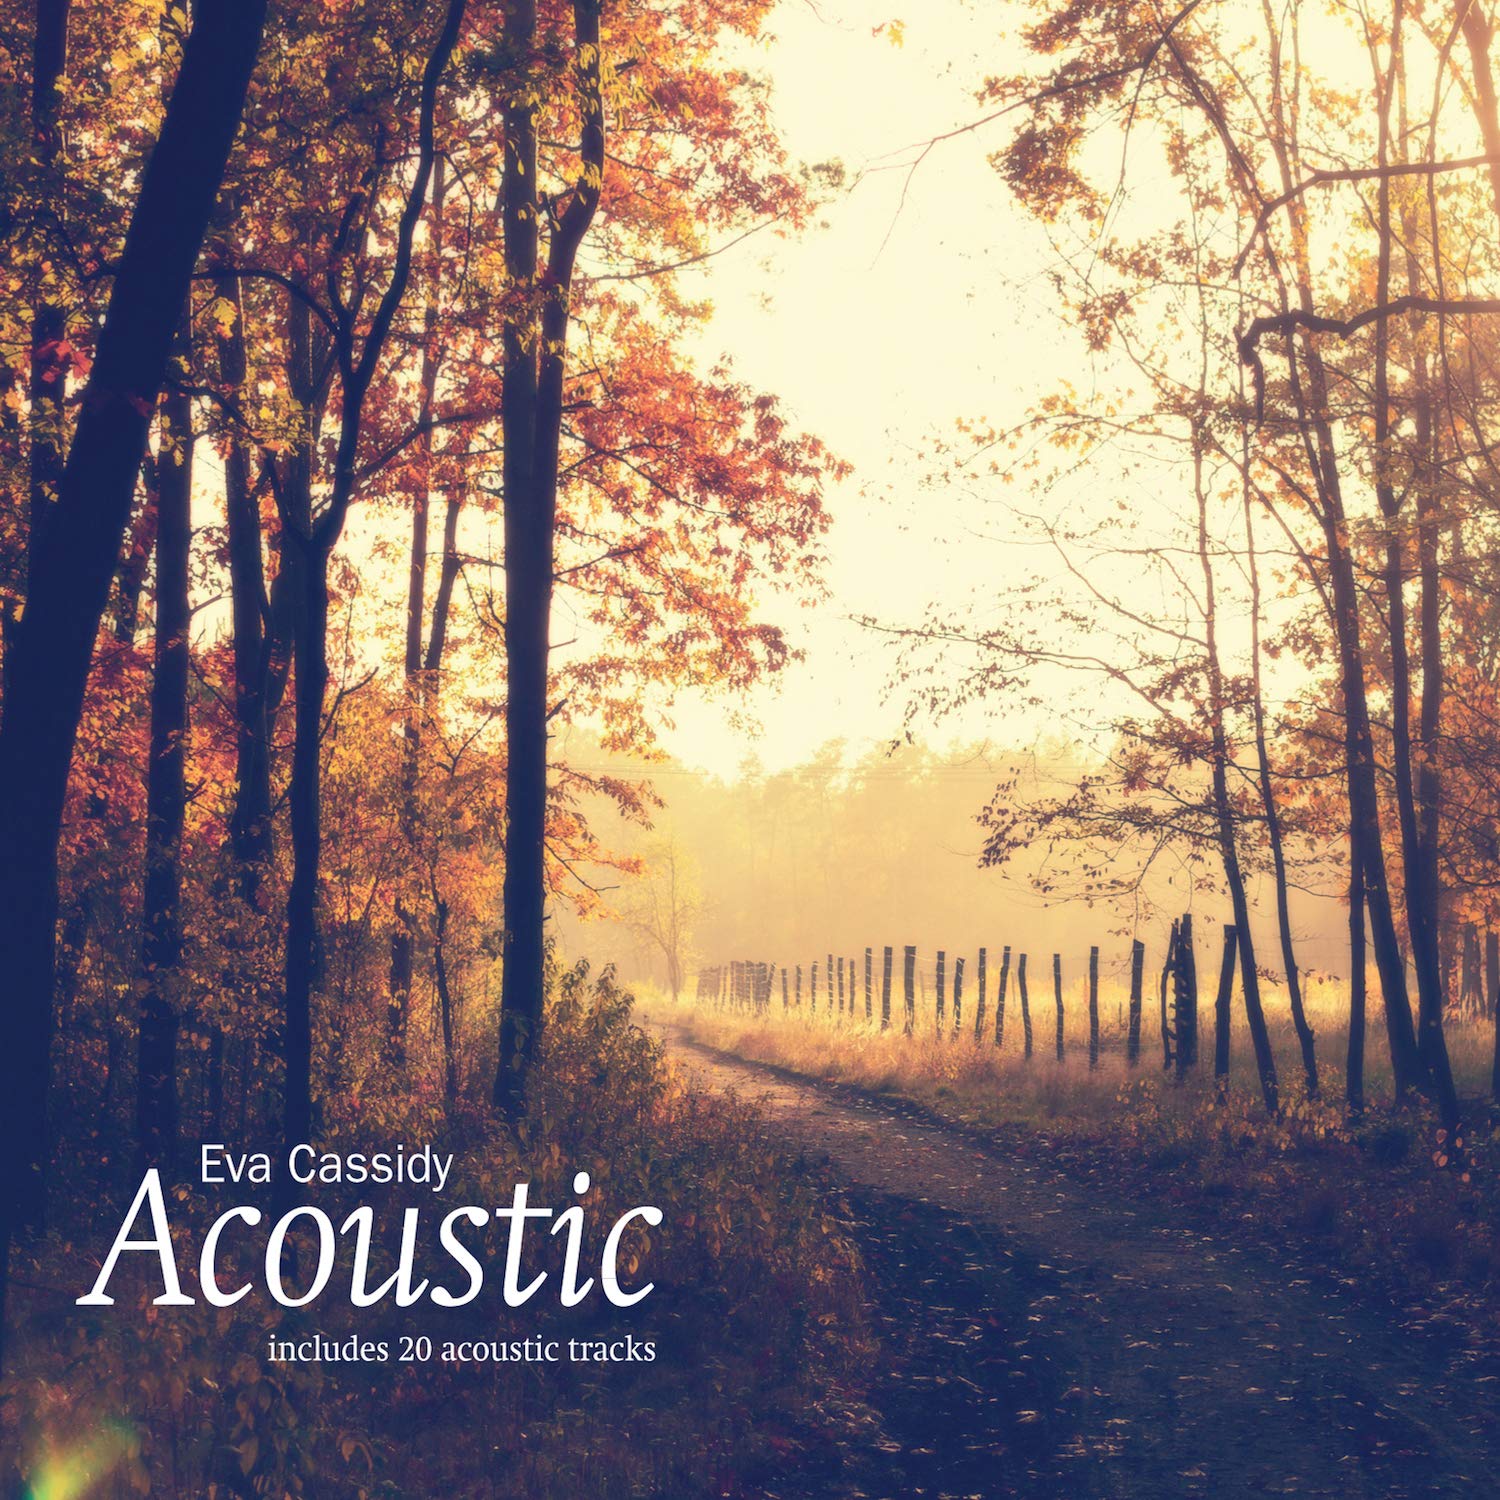 Acoustic album by Eva Cassidy